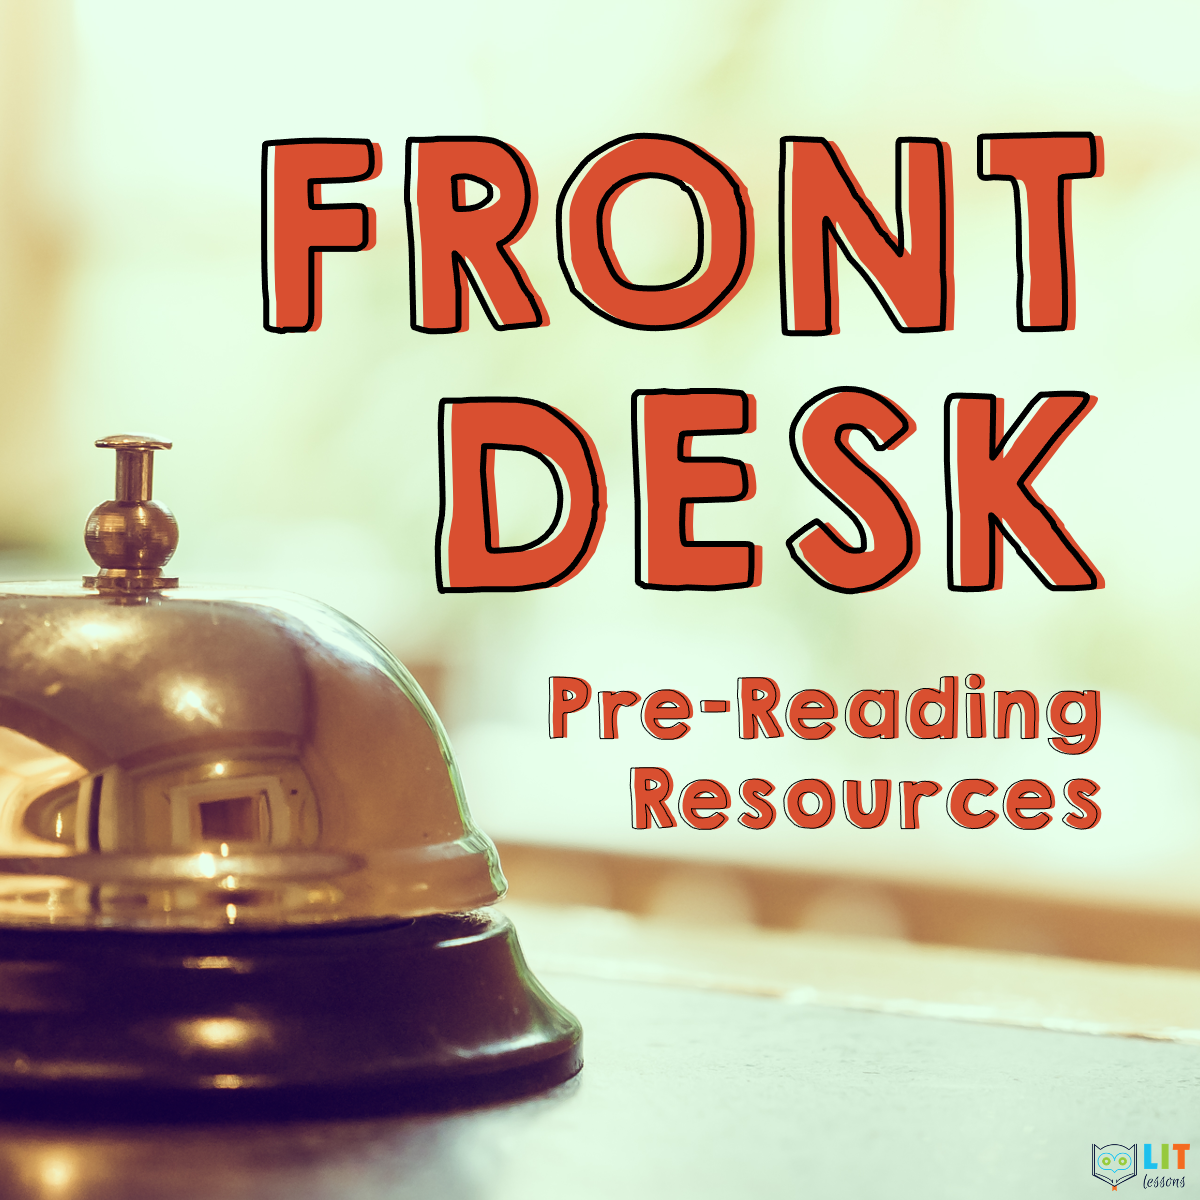 Front Desk Pre-Reading Resources